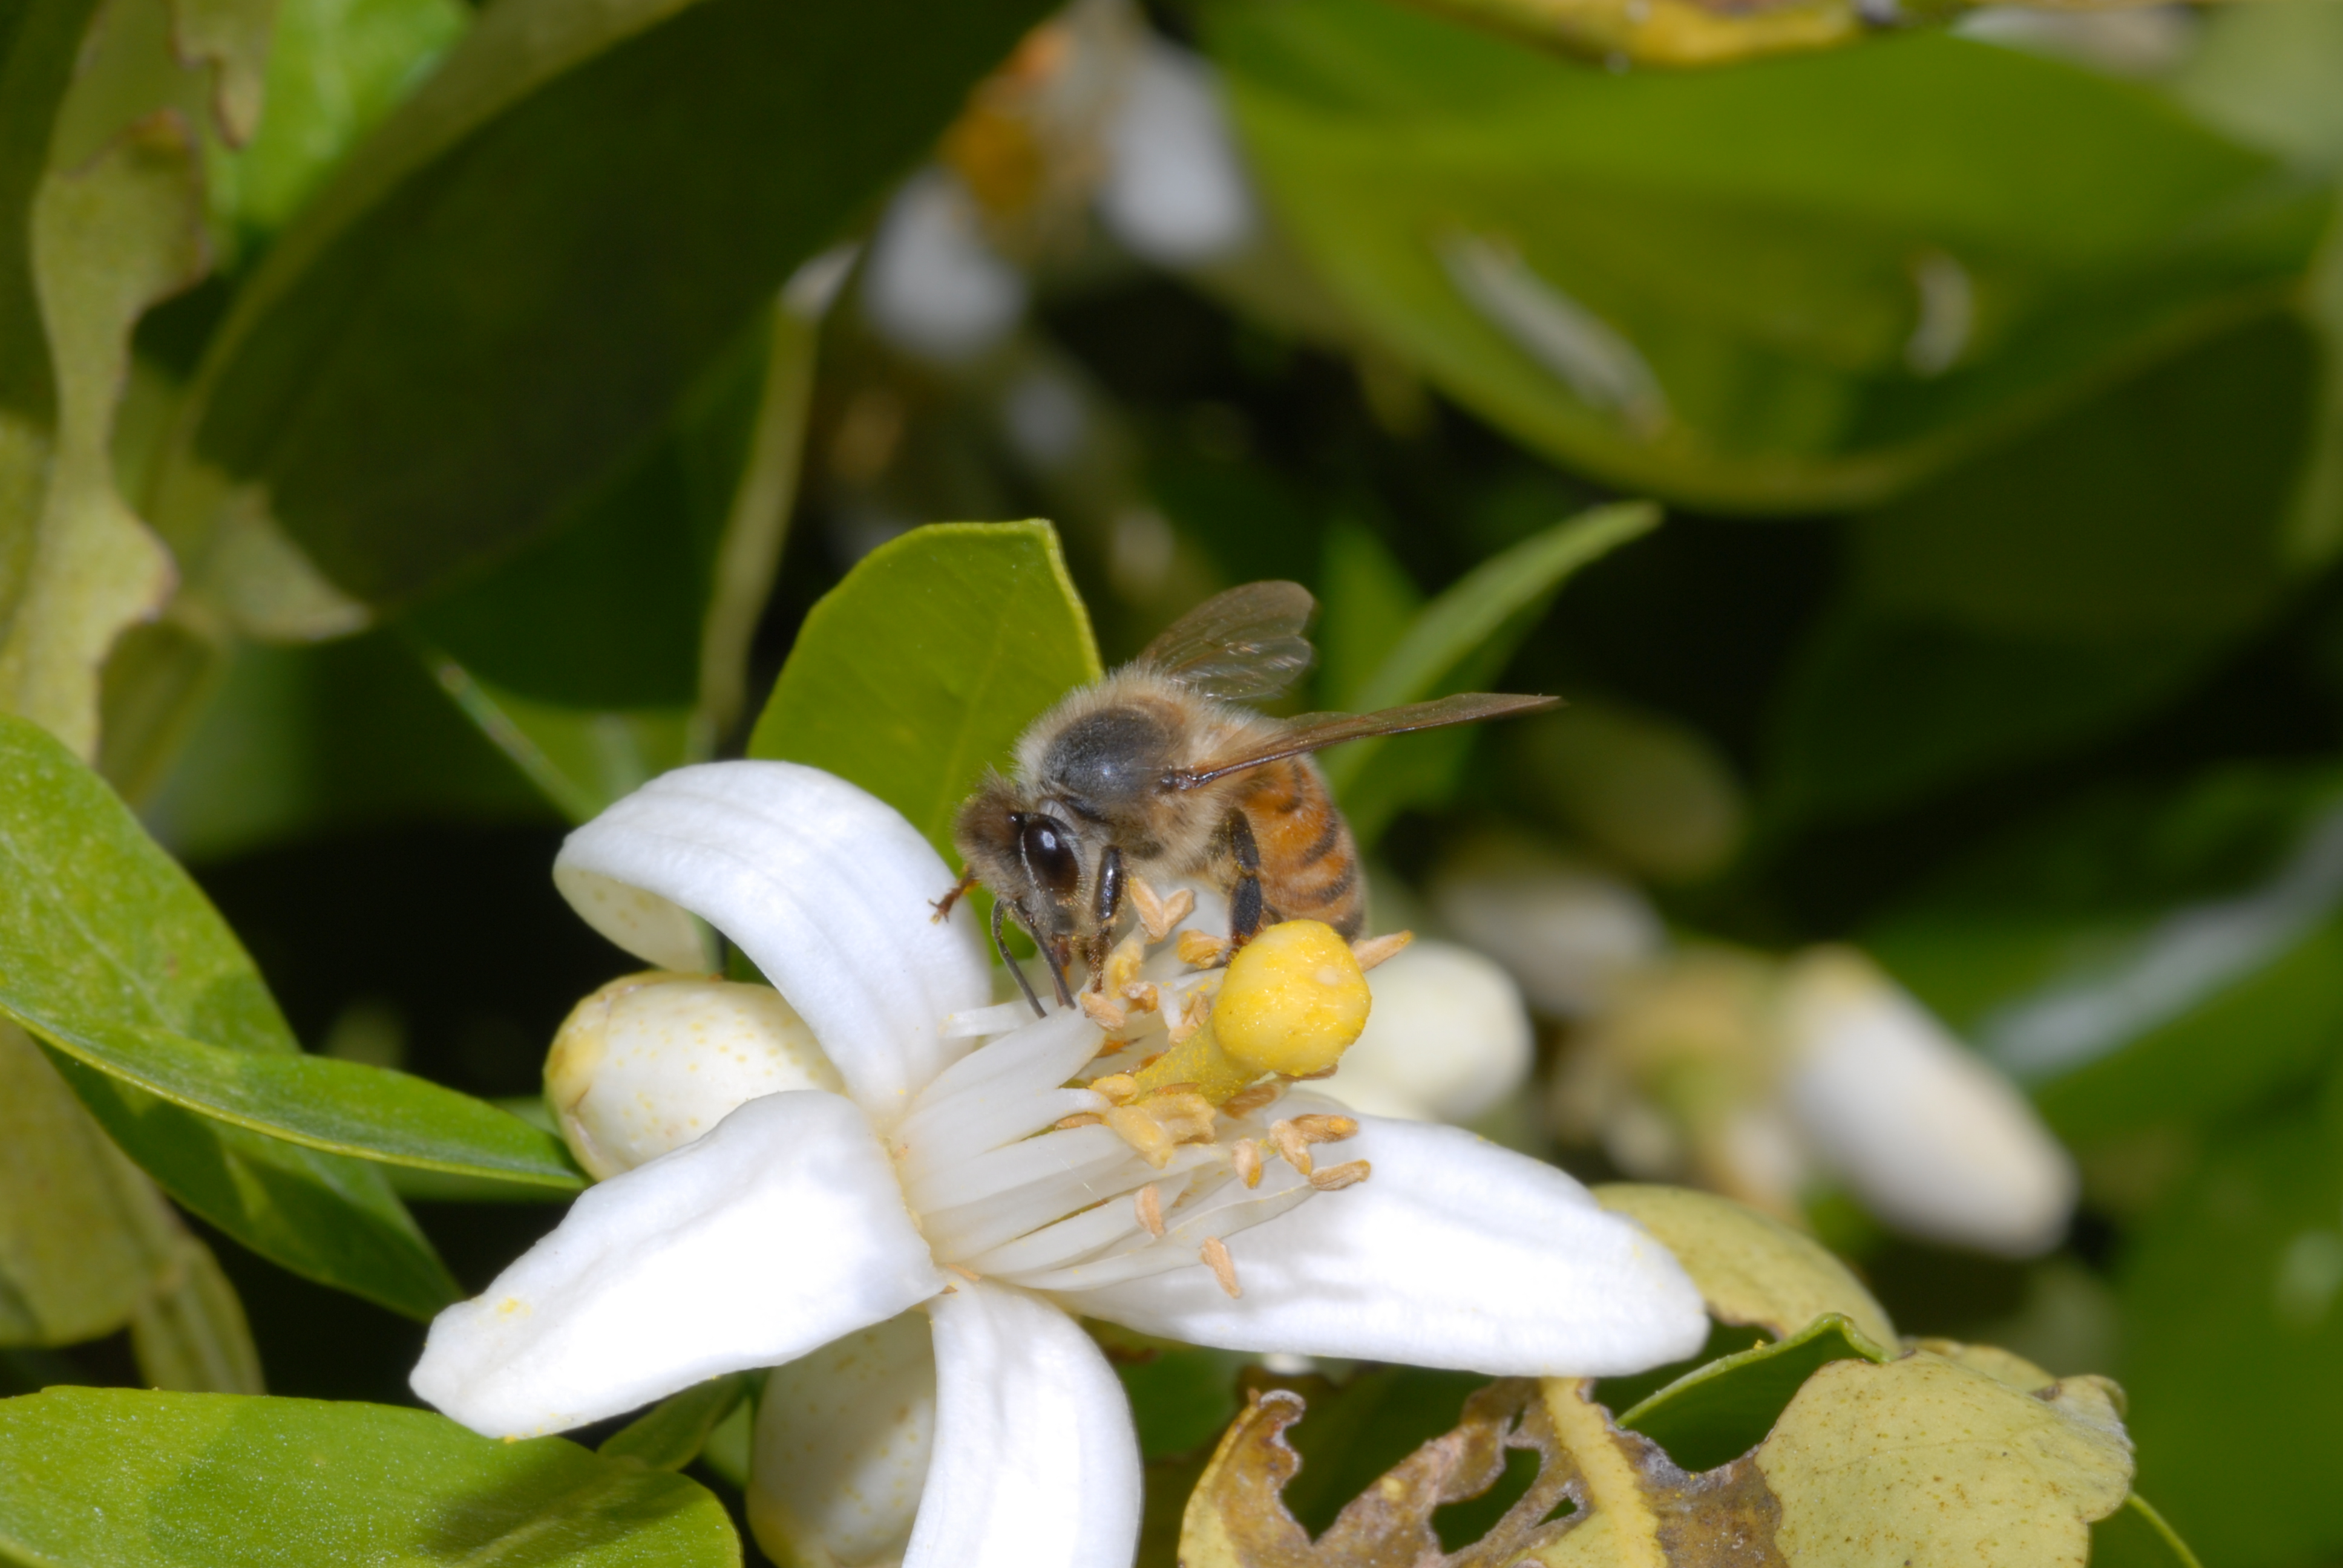 Honey bee pollinating flower